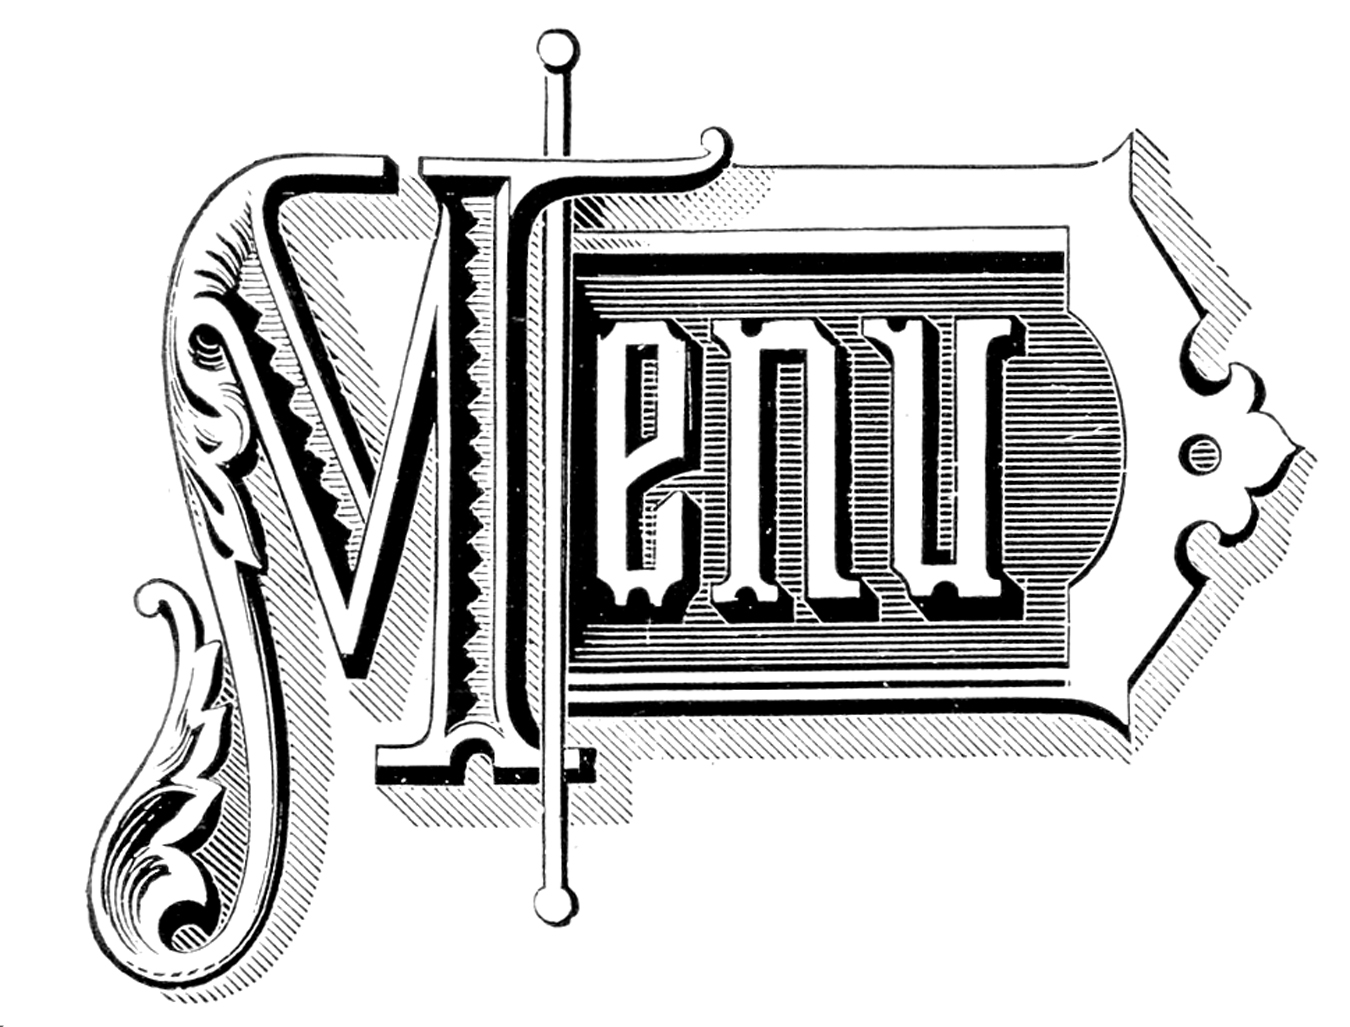 Vintage Typography   Menu Headings   Wedding   The Graphics Fairy